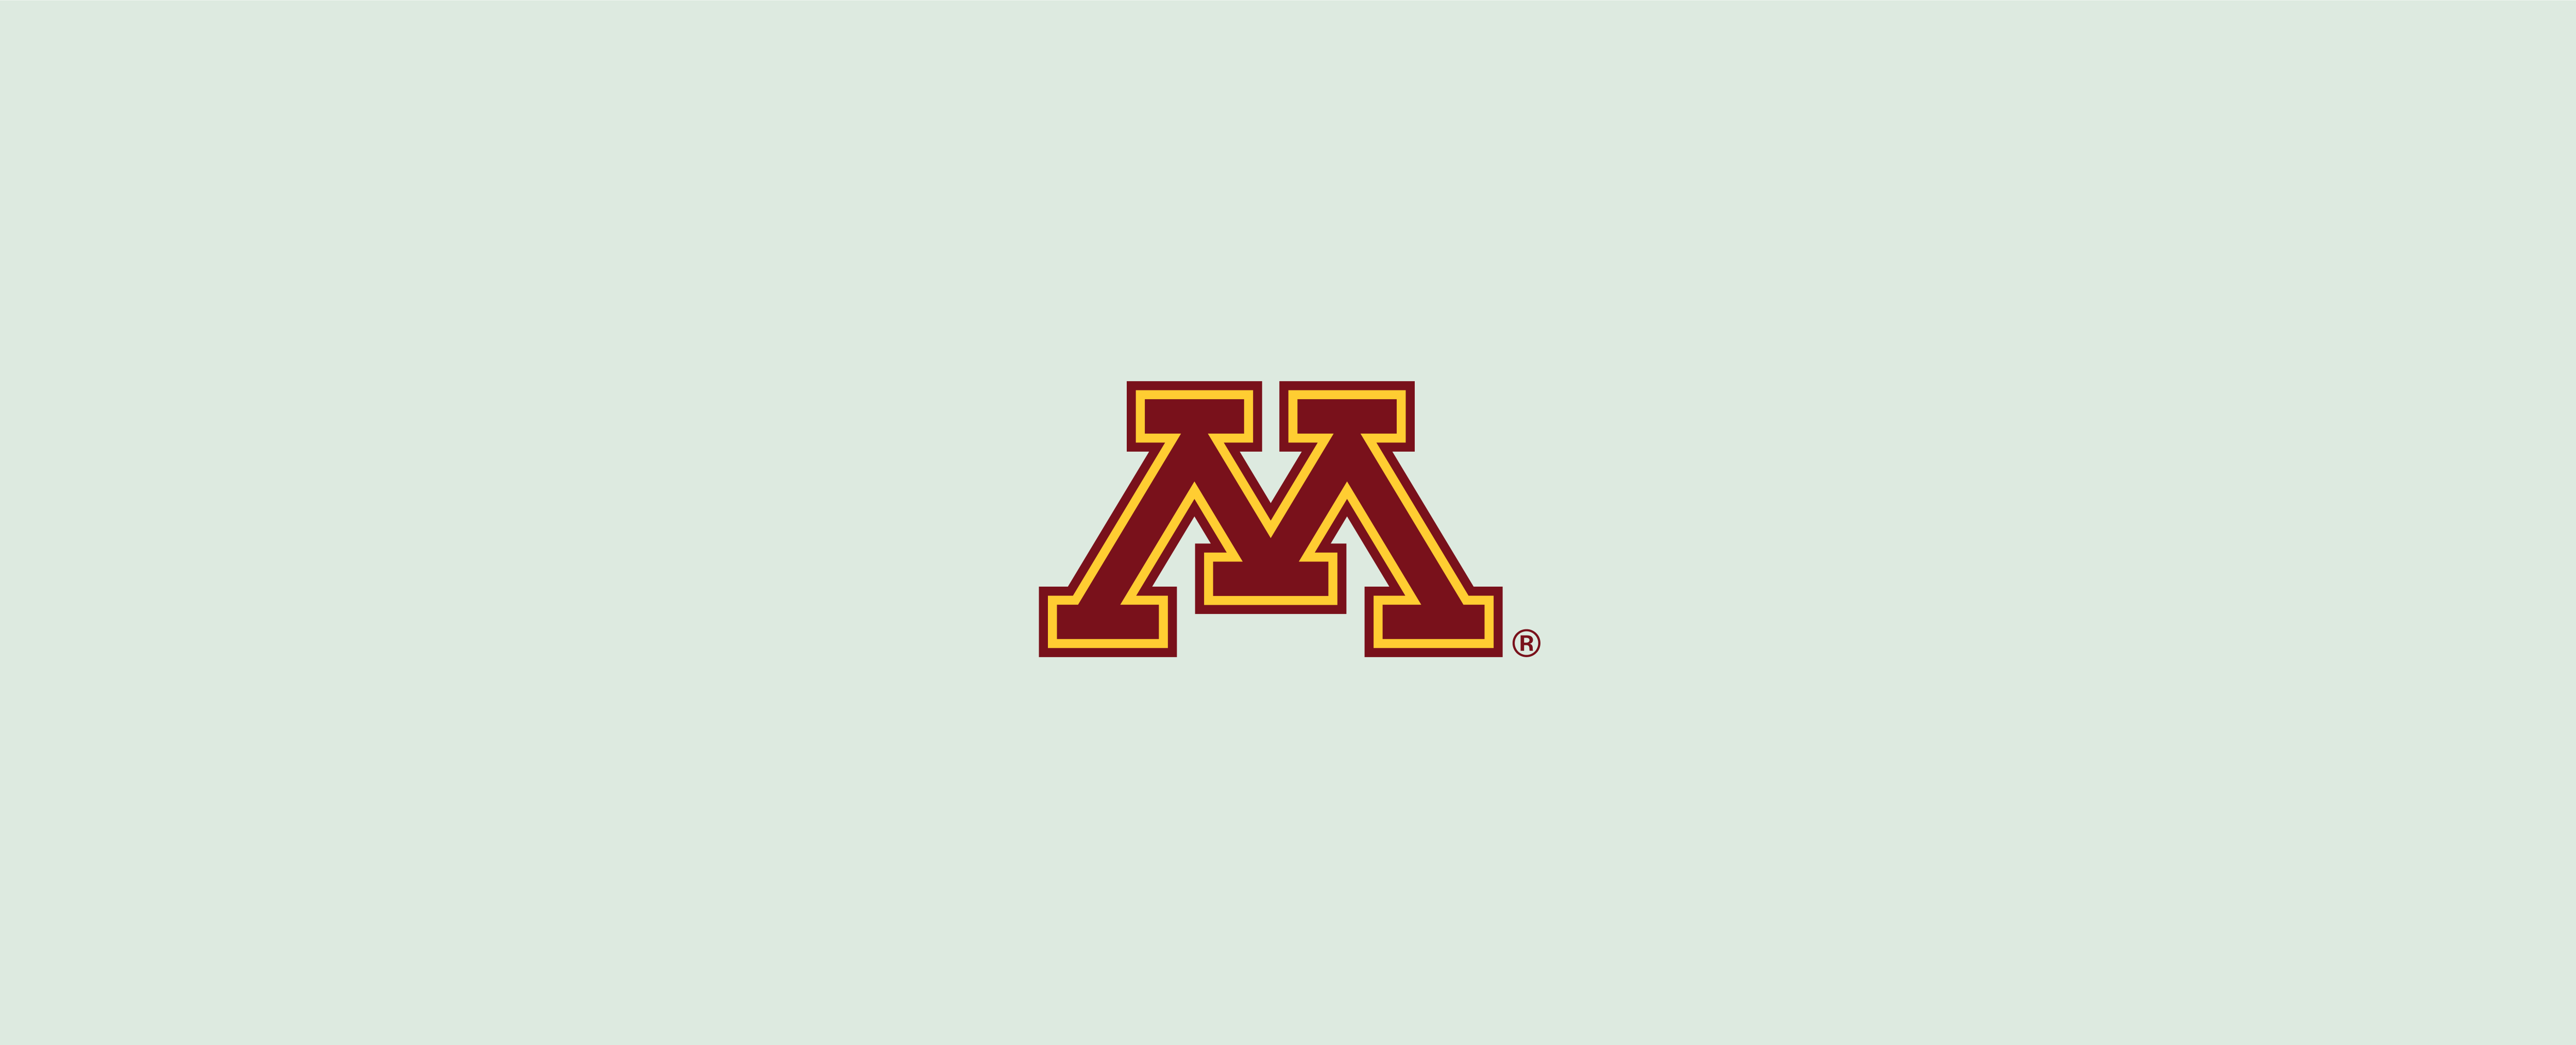 University of Minnesota, Twin Cities, logo.